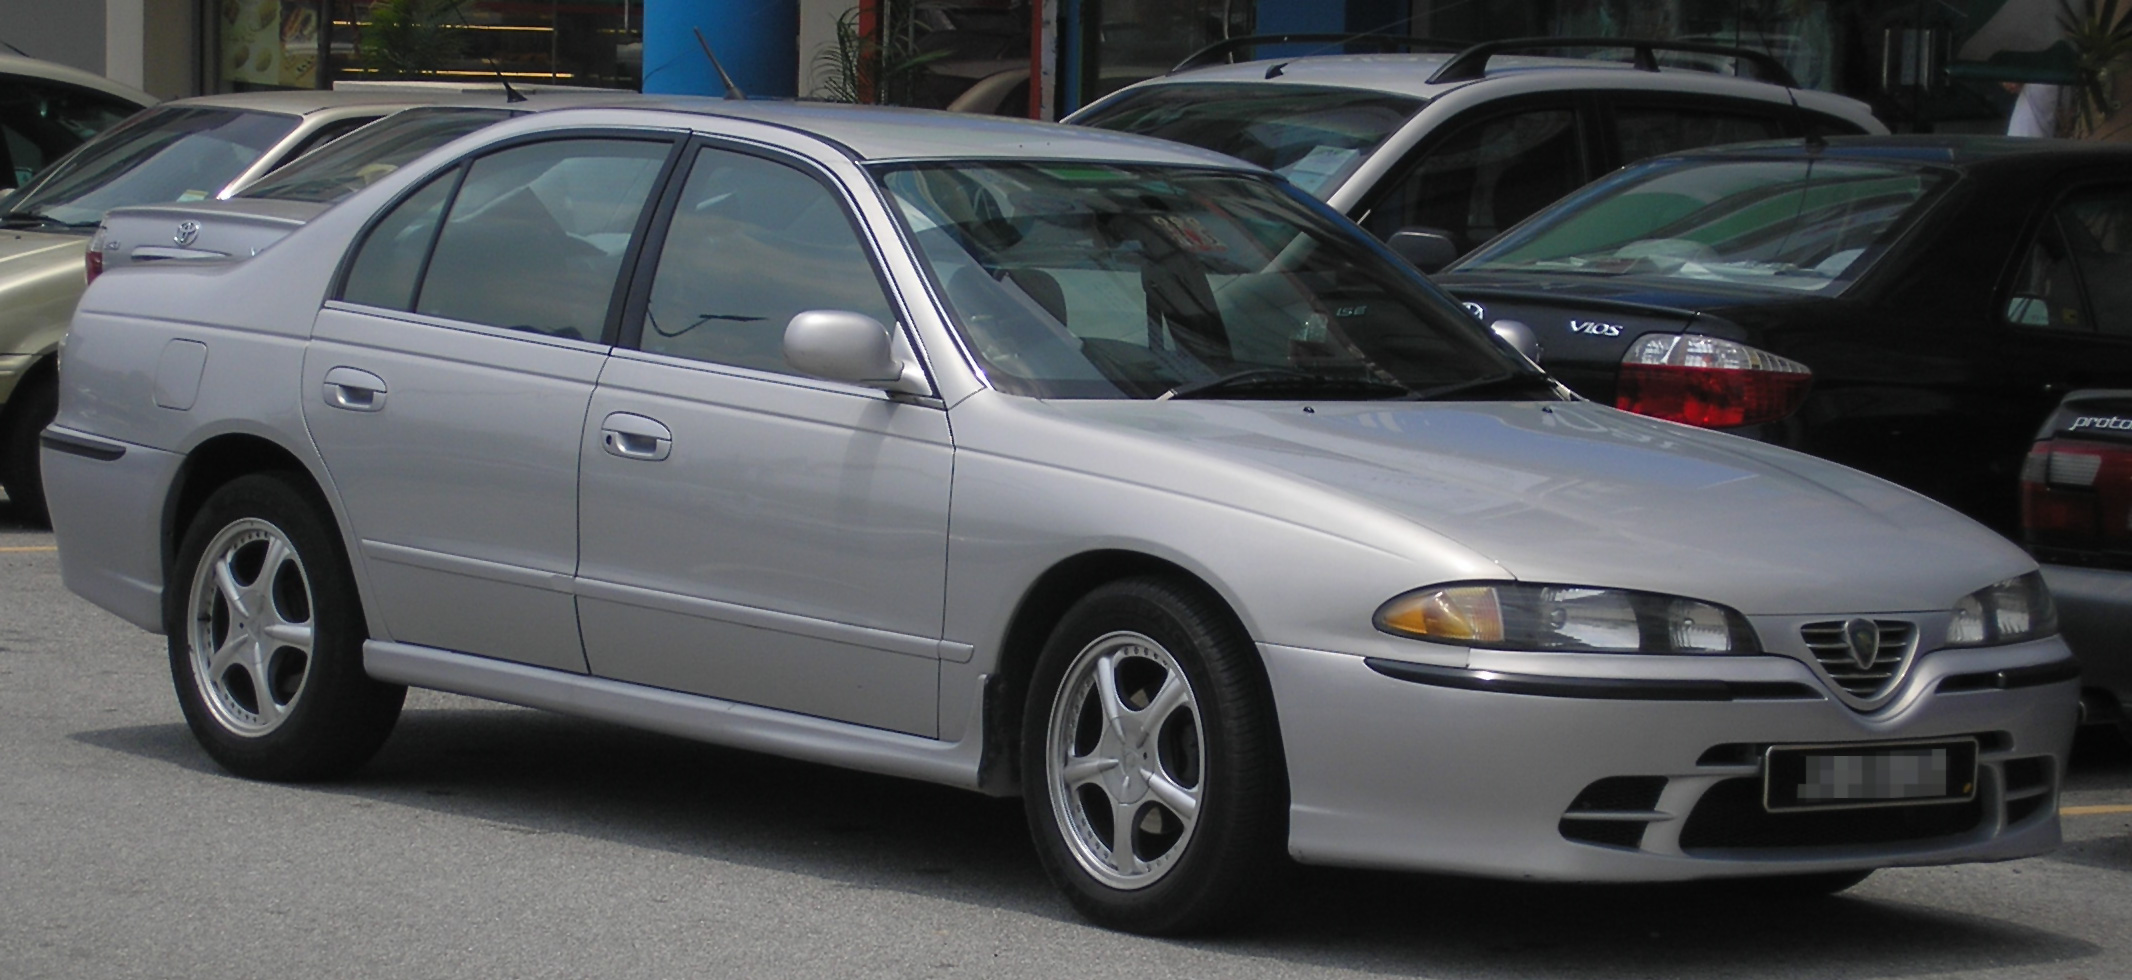 File:Proton Perdana (V6) (first generation, second facelift ...